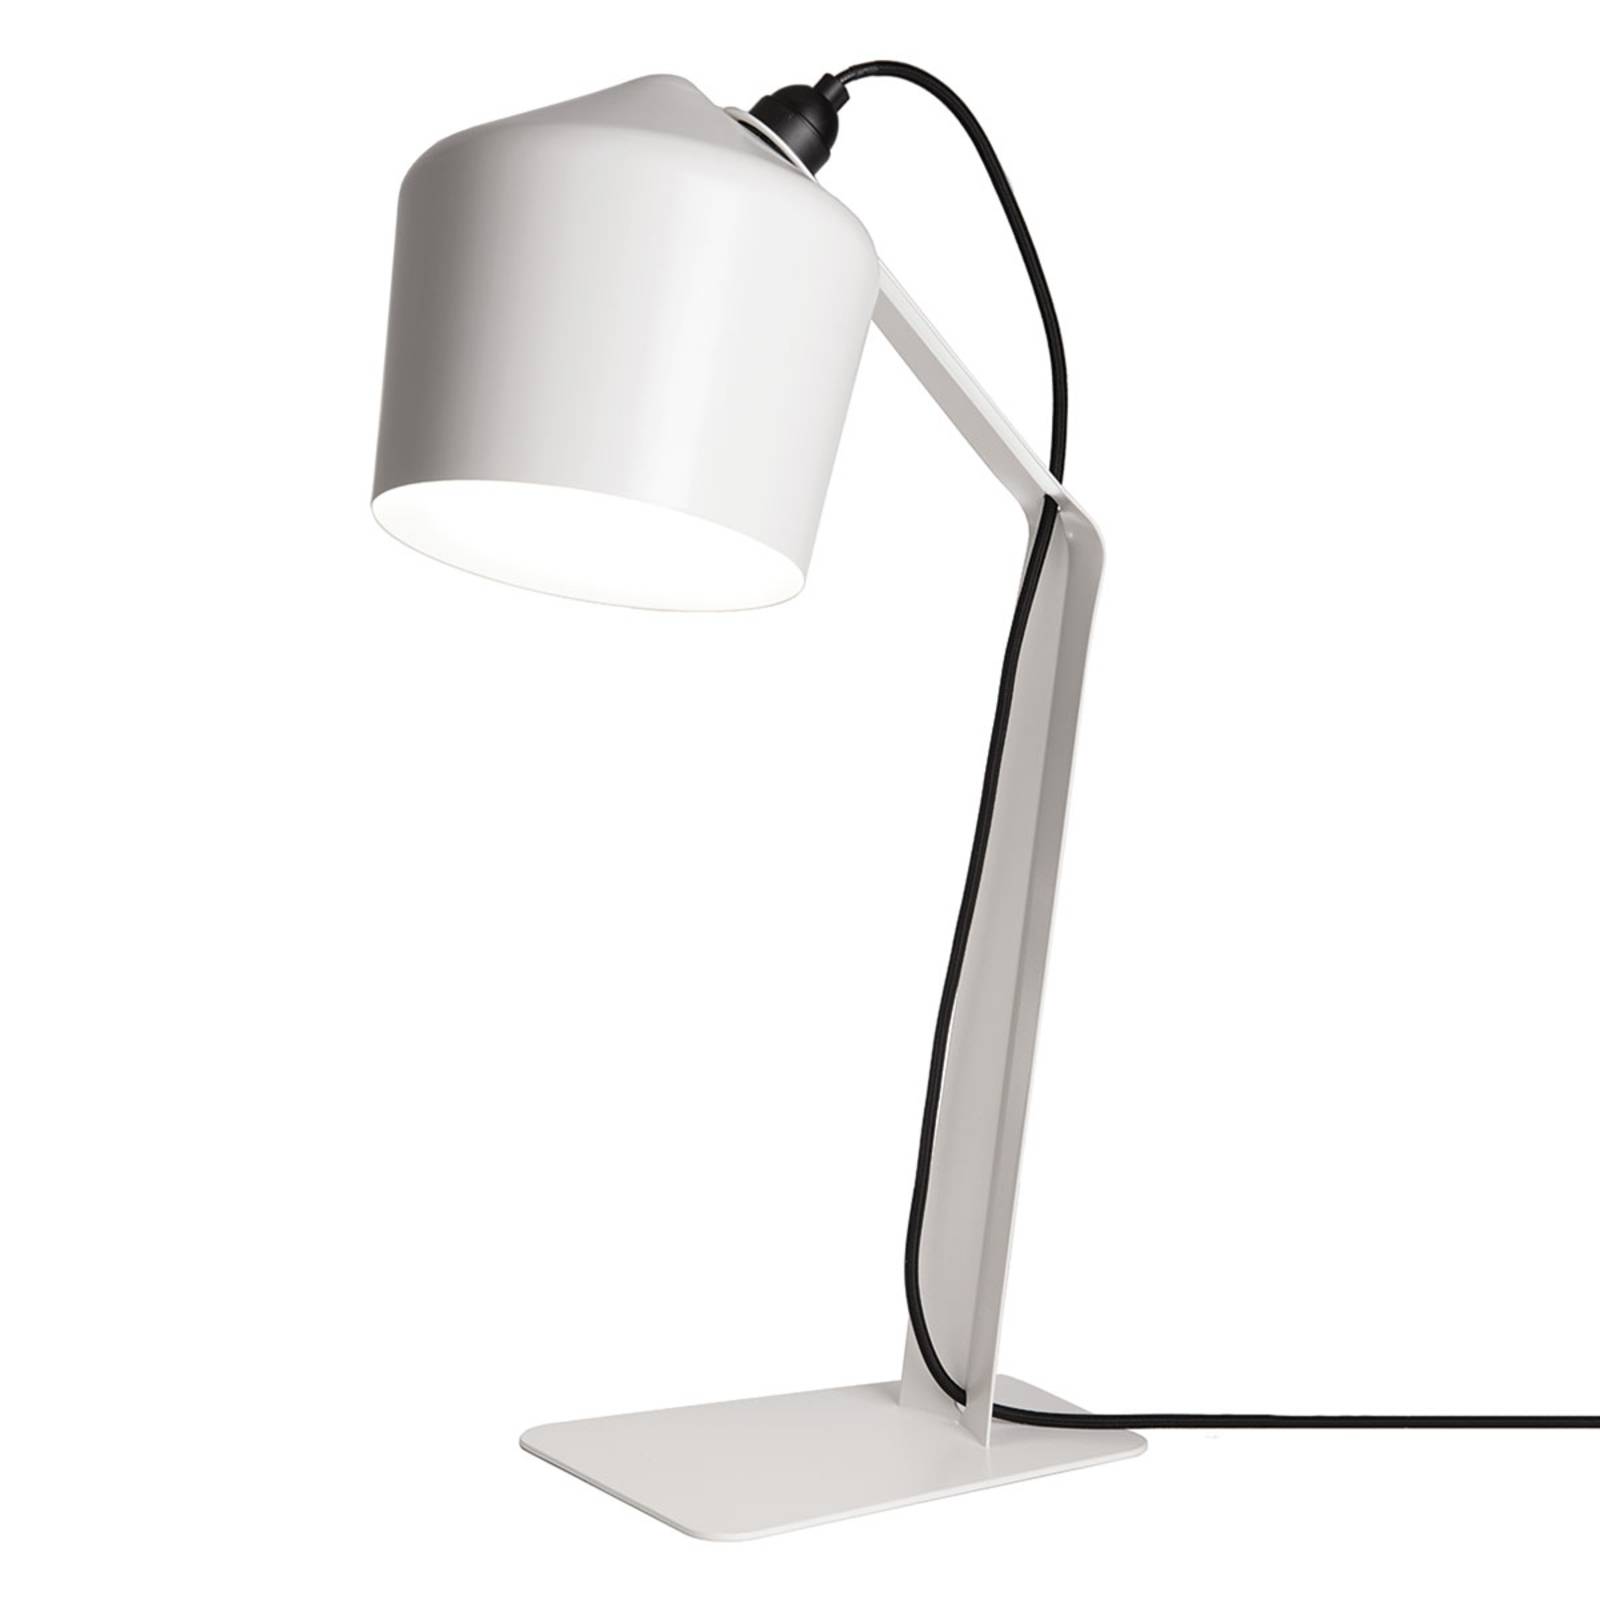 Innolux Pasila lampe à poser design blanc